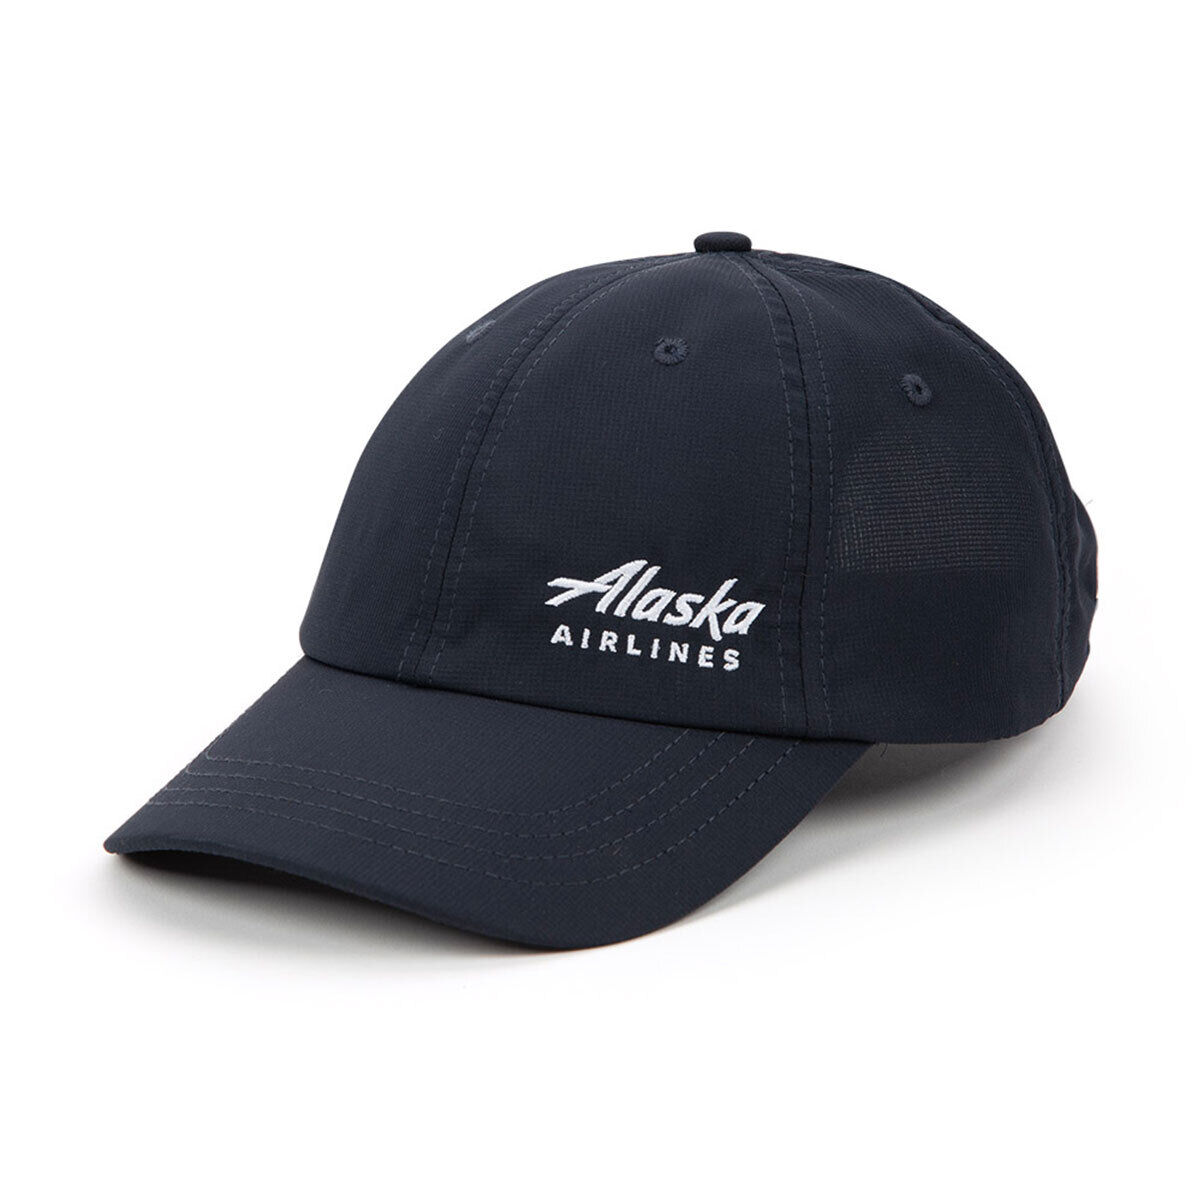 Alaska Airlines Navy White Embroidered Side Logo Adjustable Baseball Cap Hat New